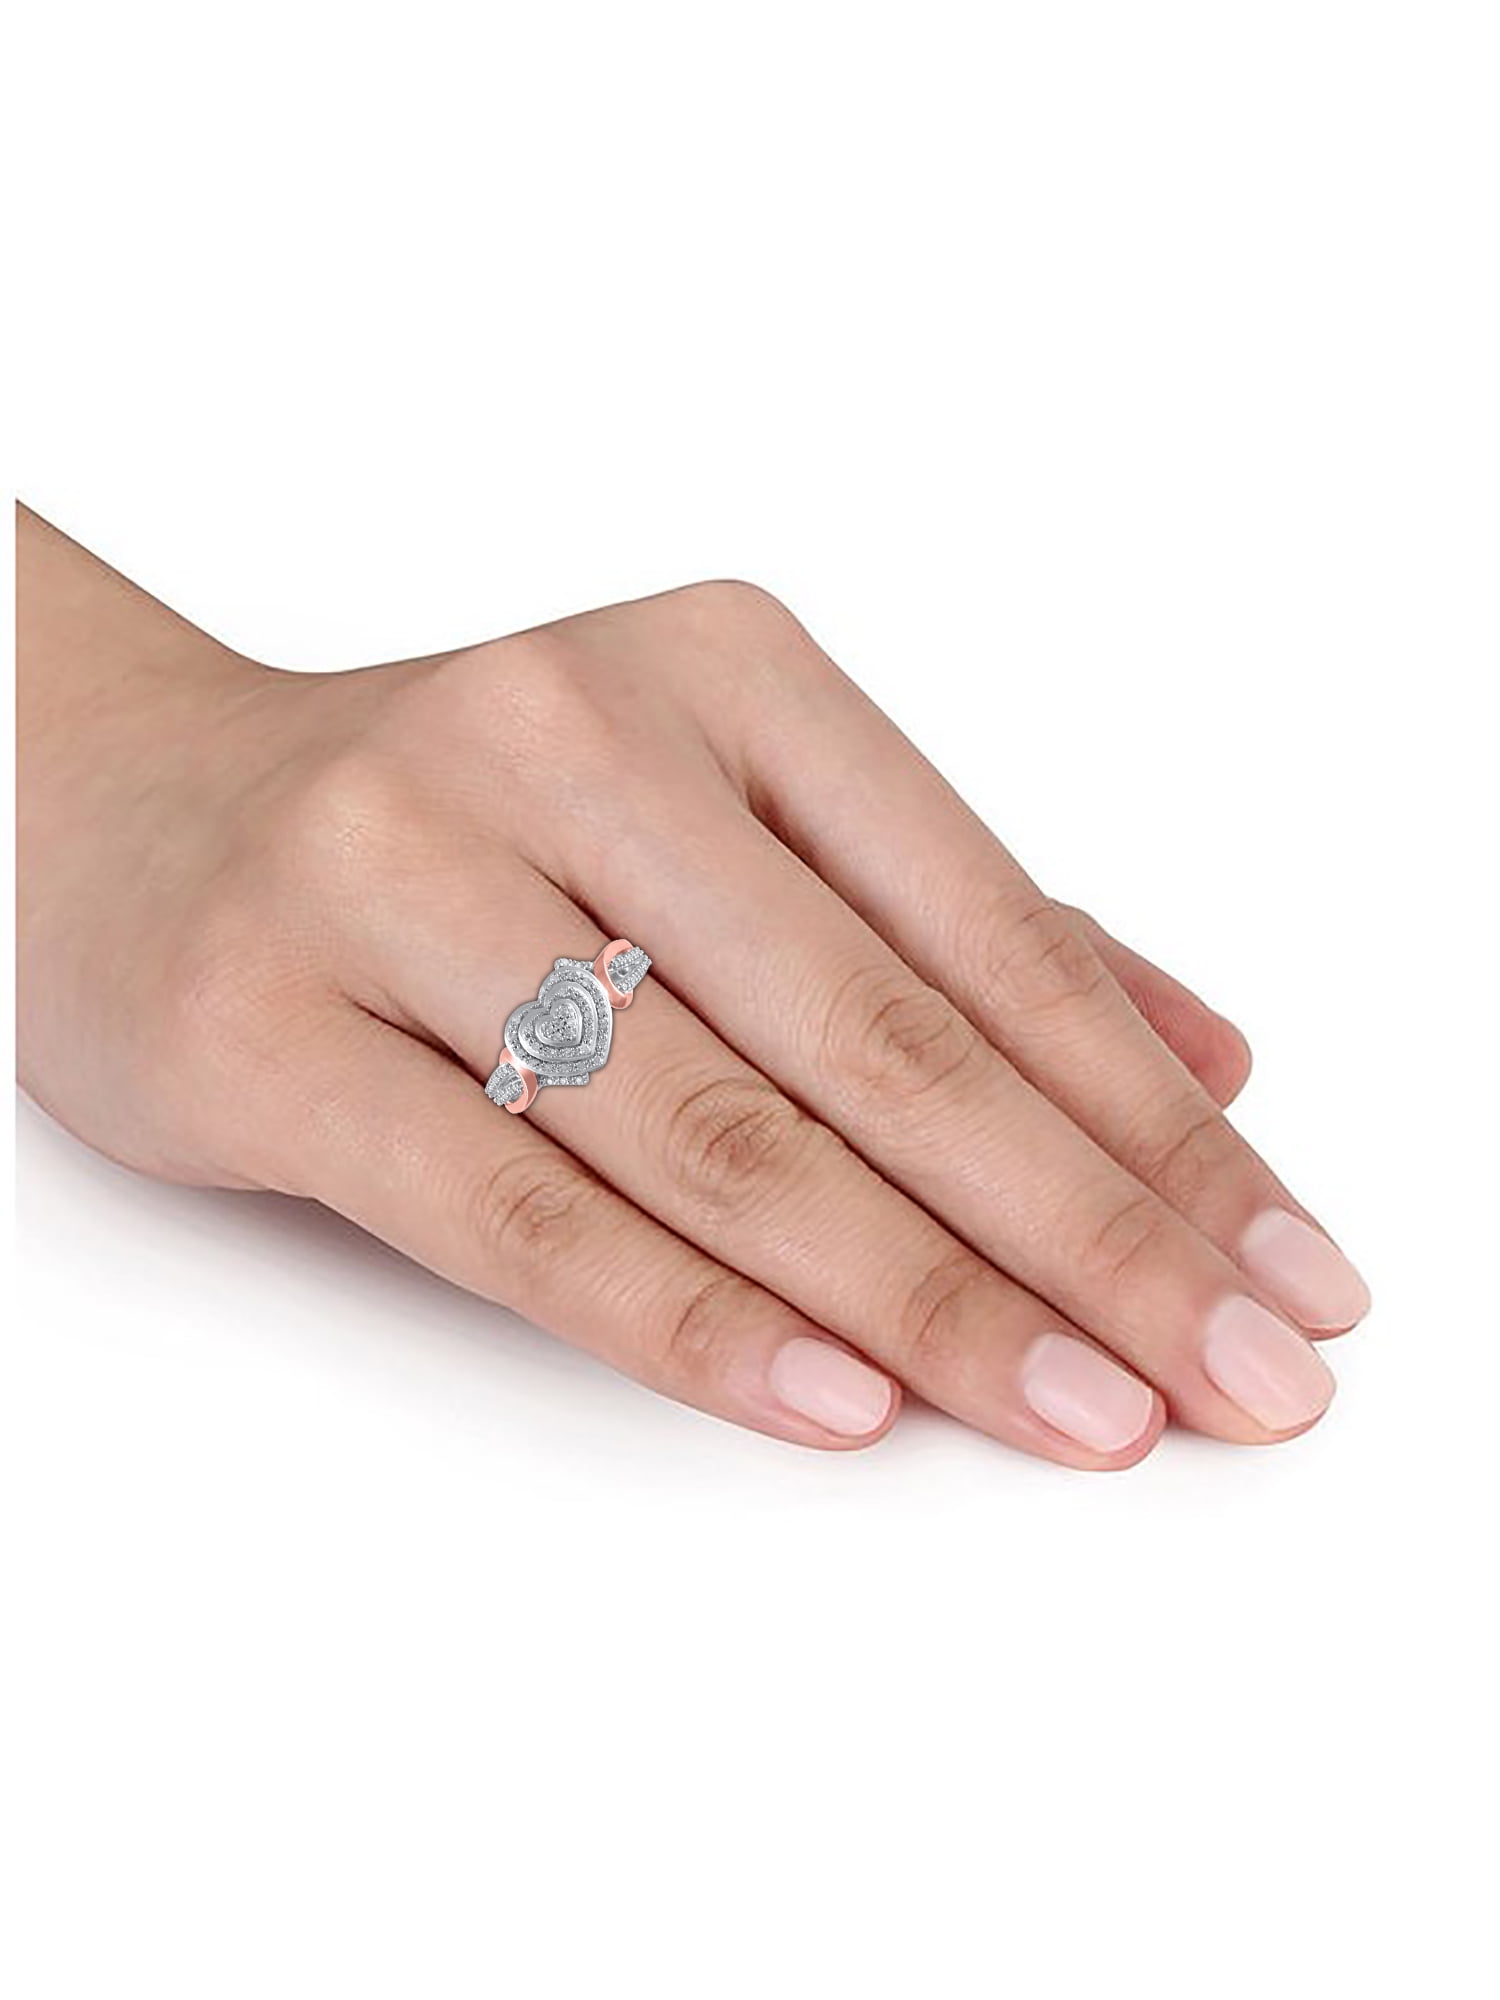 Stainless steel Simple Pearls Waterproof 14k gold plating Minimalist Ring Adjustable size